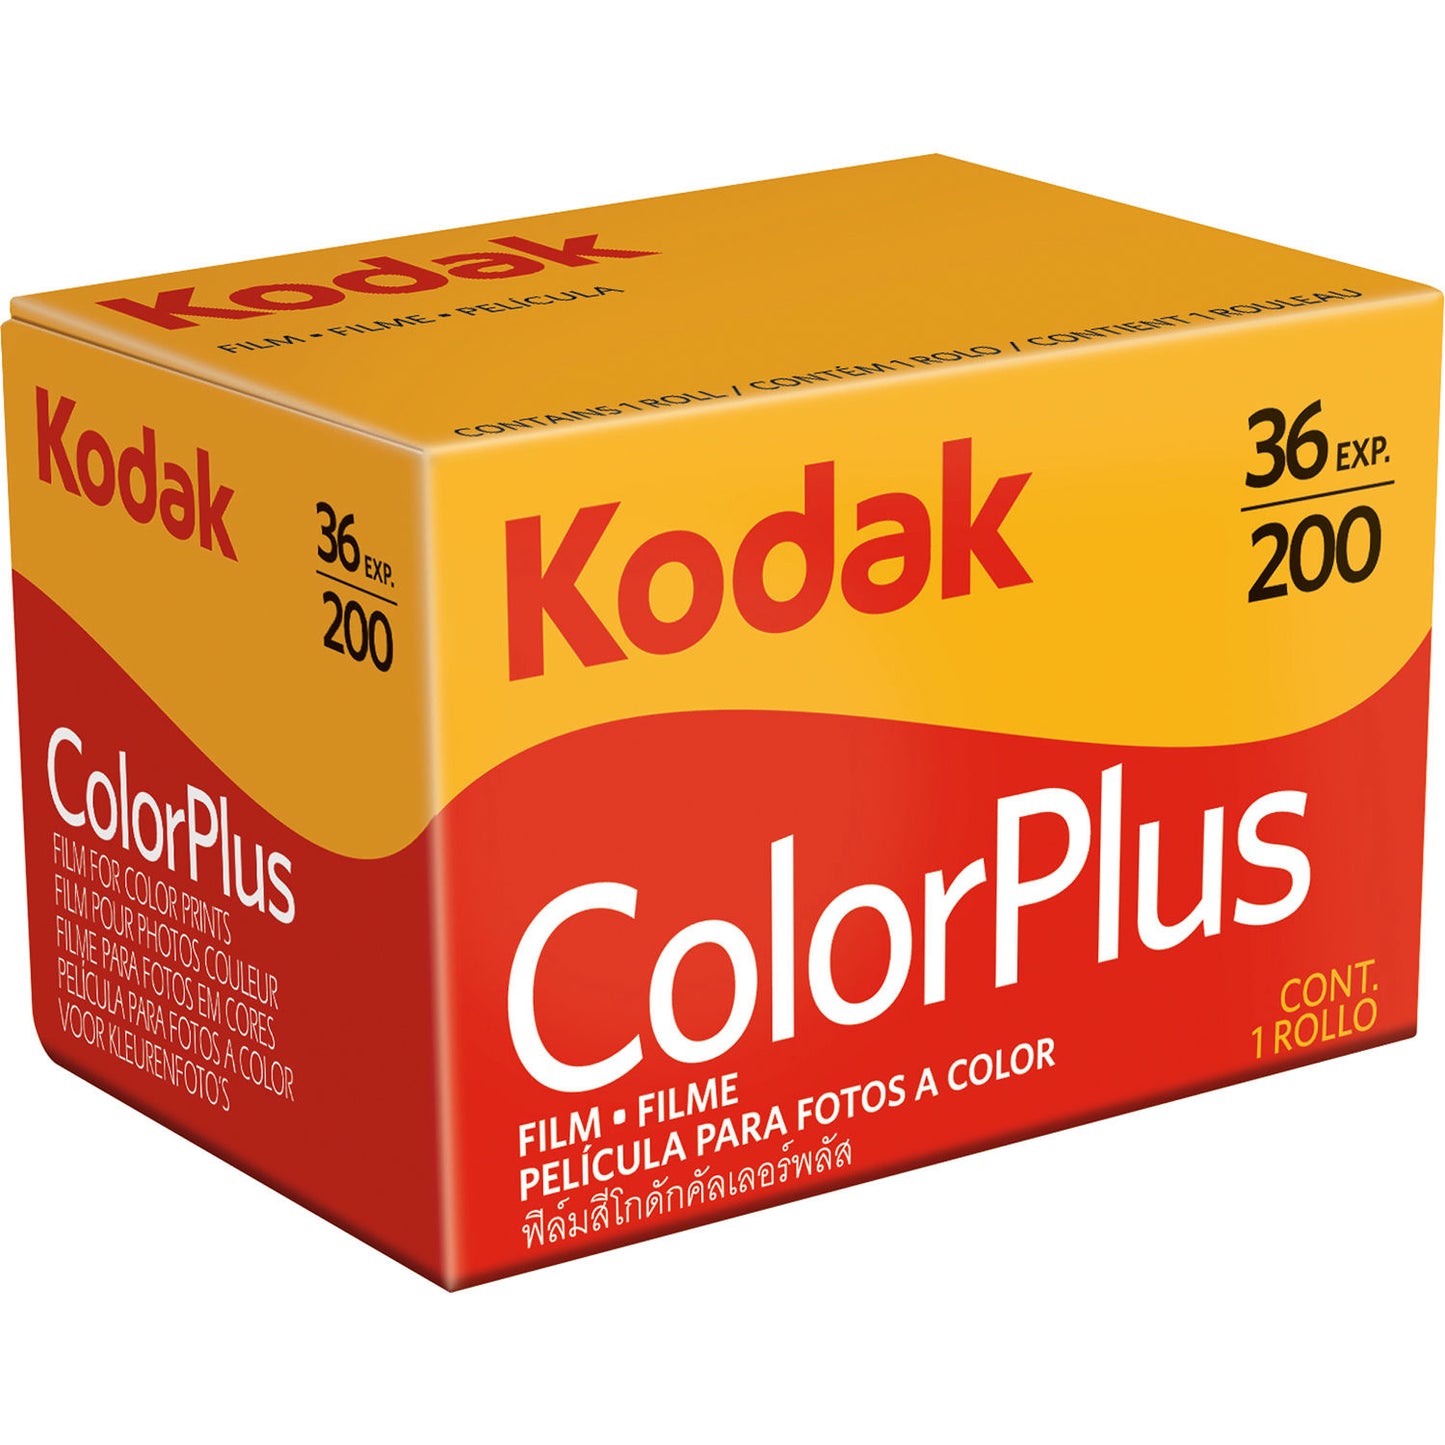 Kodak Colorplus 200 - 35mm, 36 exp.